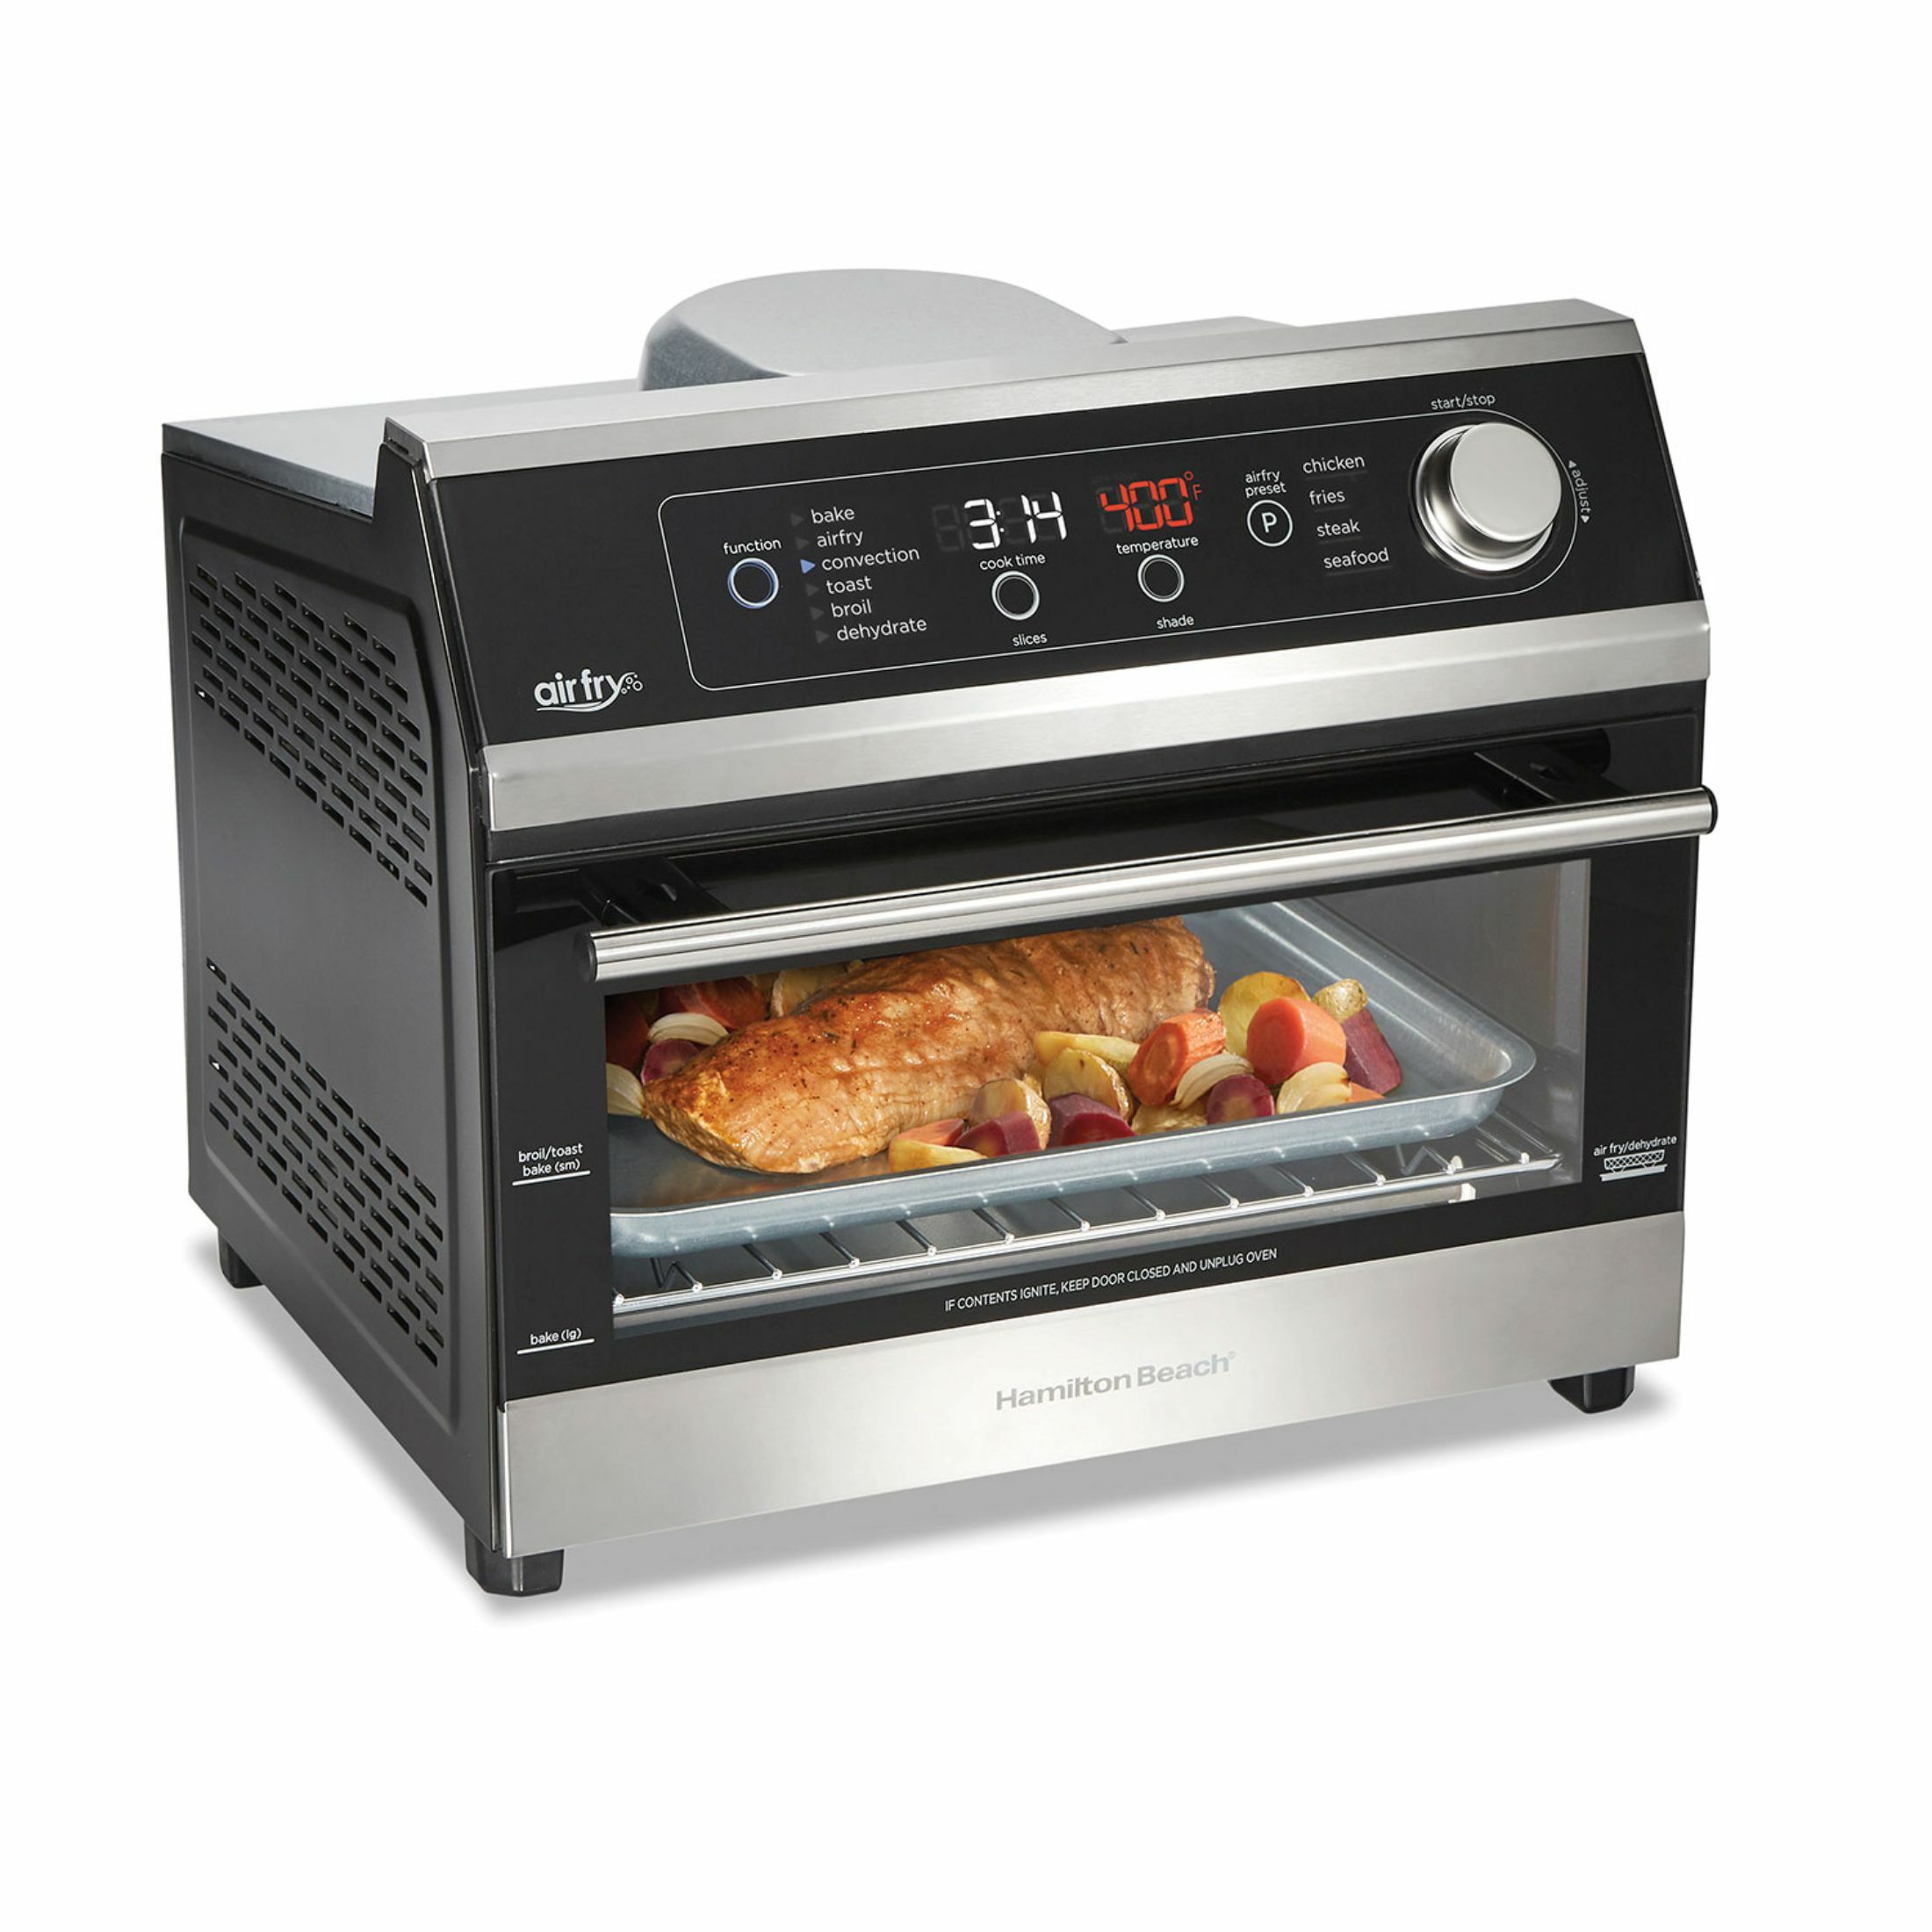 Hamilton Beach Digital Air Fryer Toaster Oven 6 Slice Capacity - Black, Stainless Steel - image 1 of 2